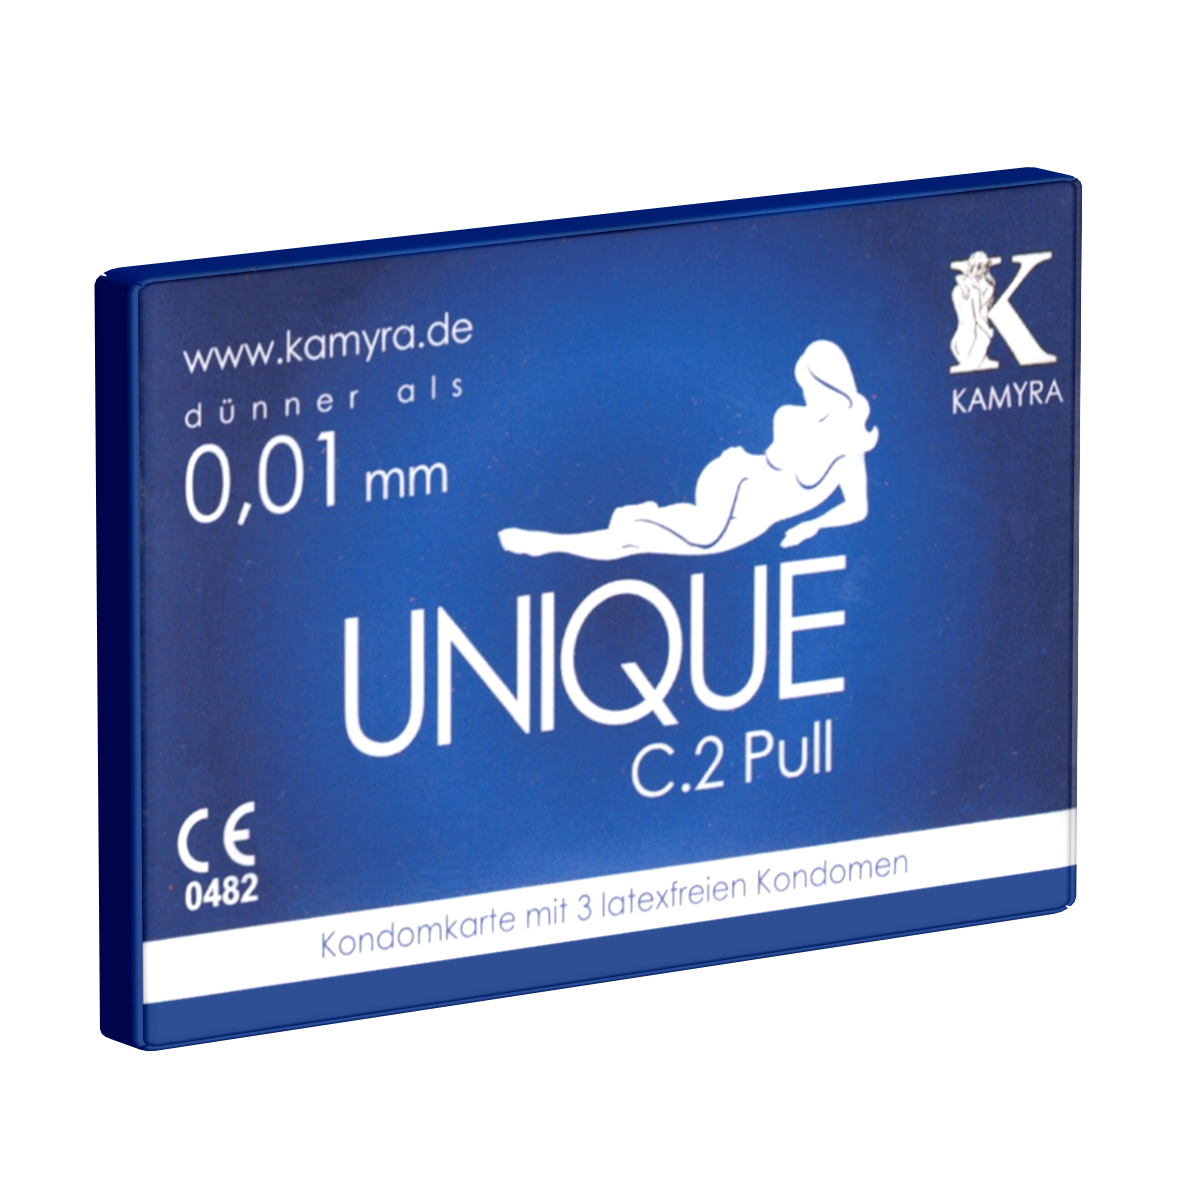 Kamyra «Unique C.2 Pull» Kondomkarte mit 3 latexfreien Kondomen